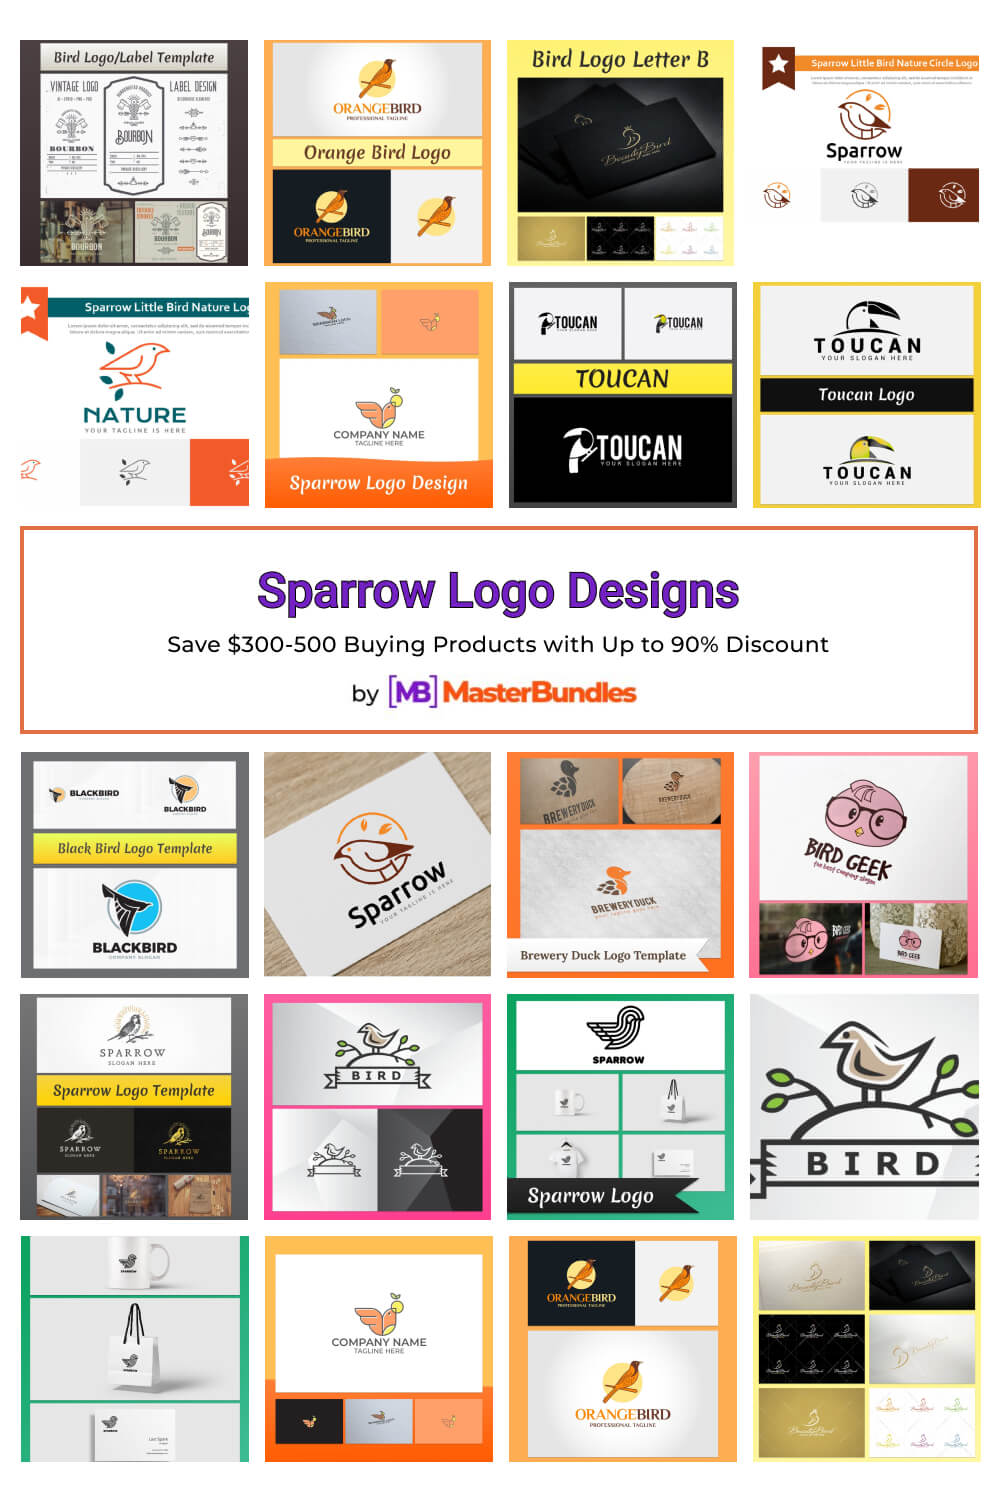 sparrow logo designs pinterest image.